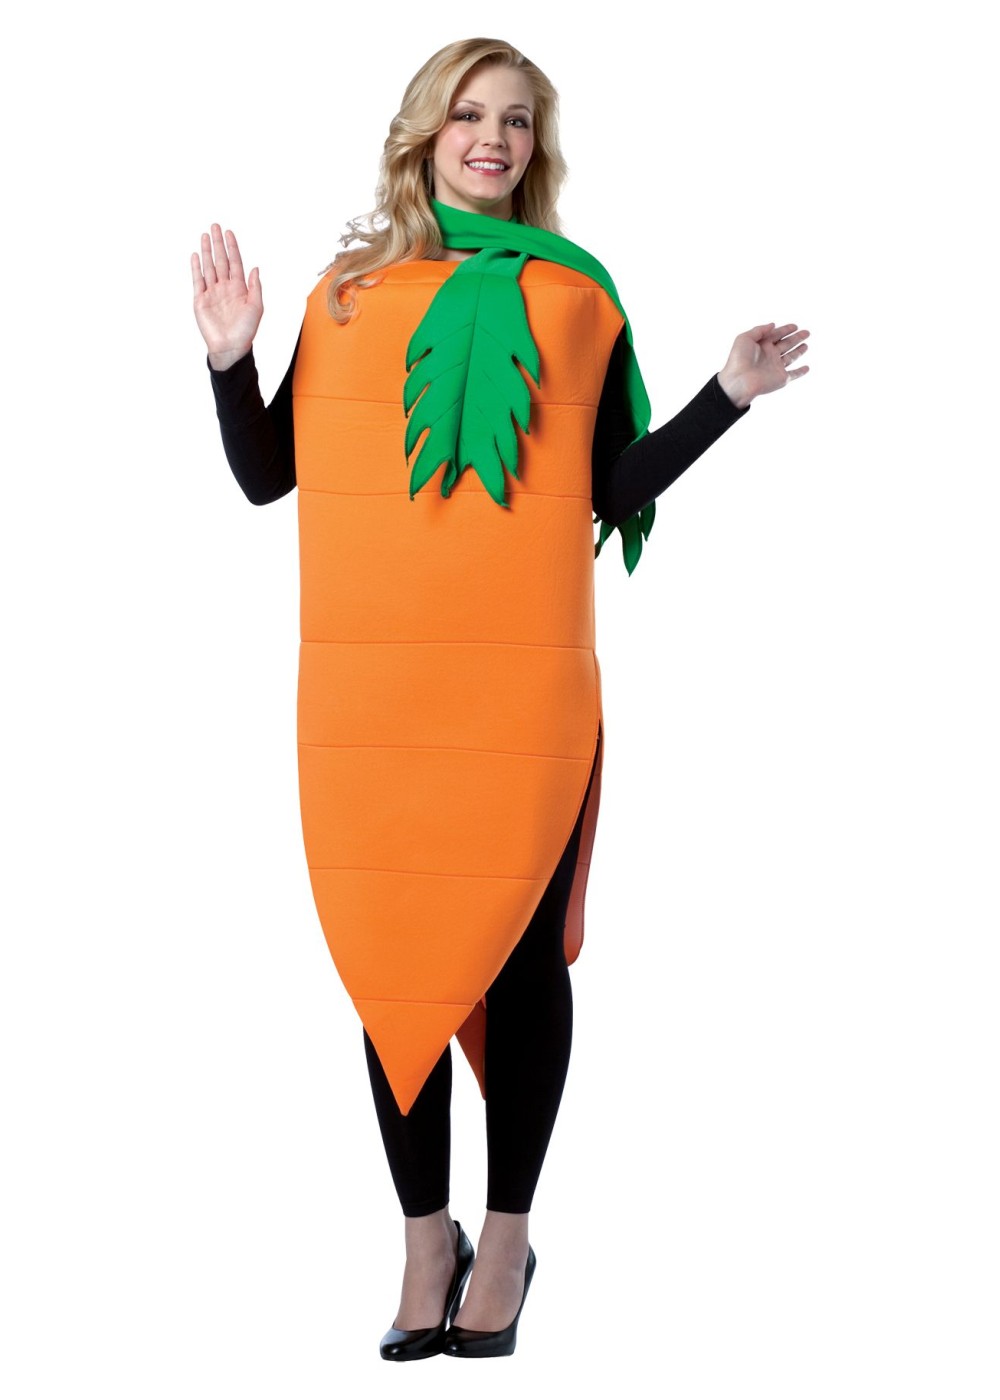 Womens Carrot Costume